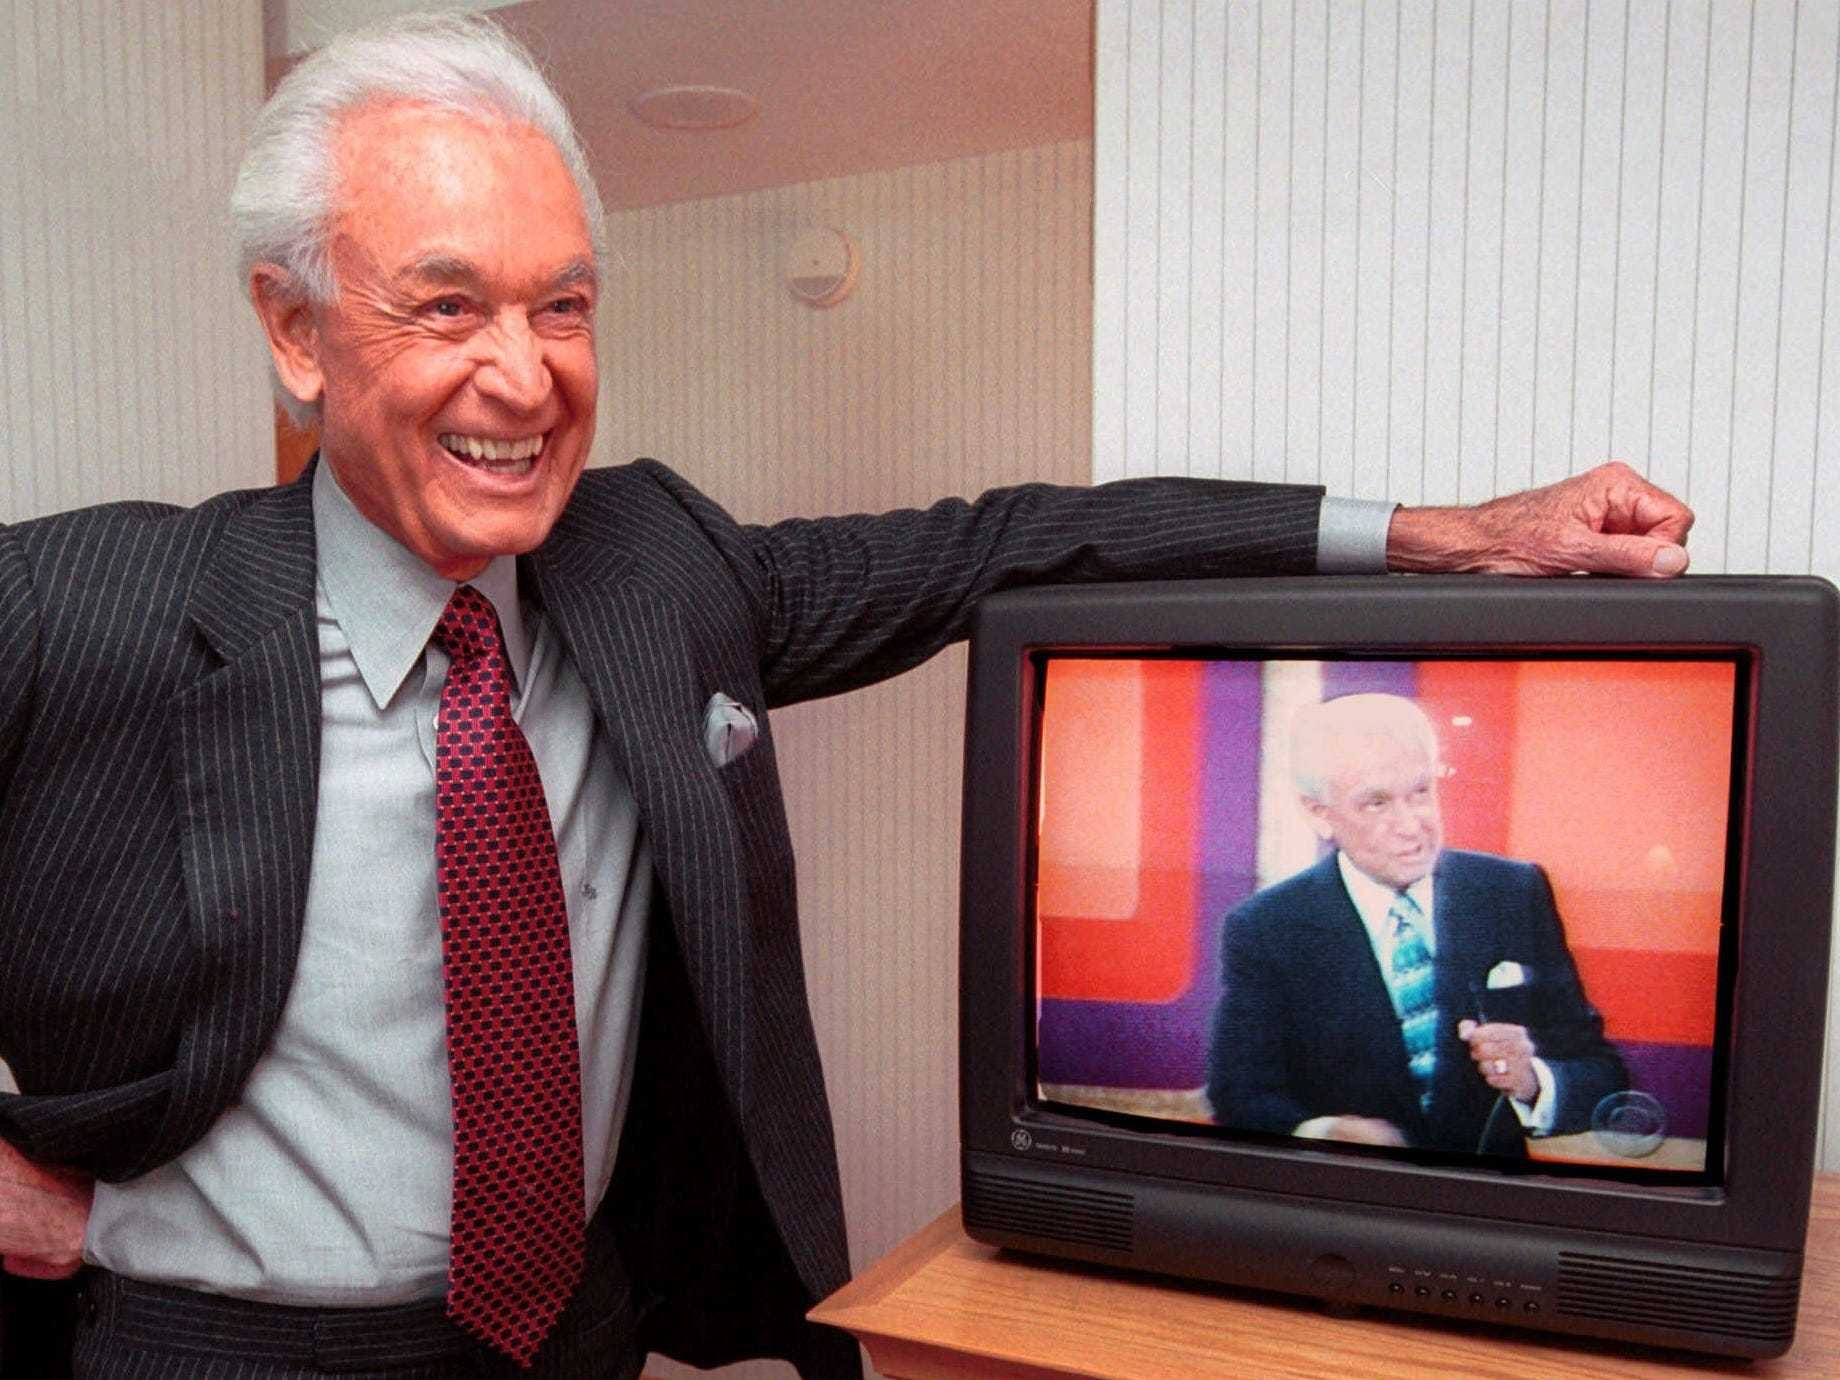 Game show host Bob Barker dies aged 99, publicist says